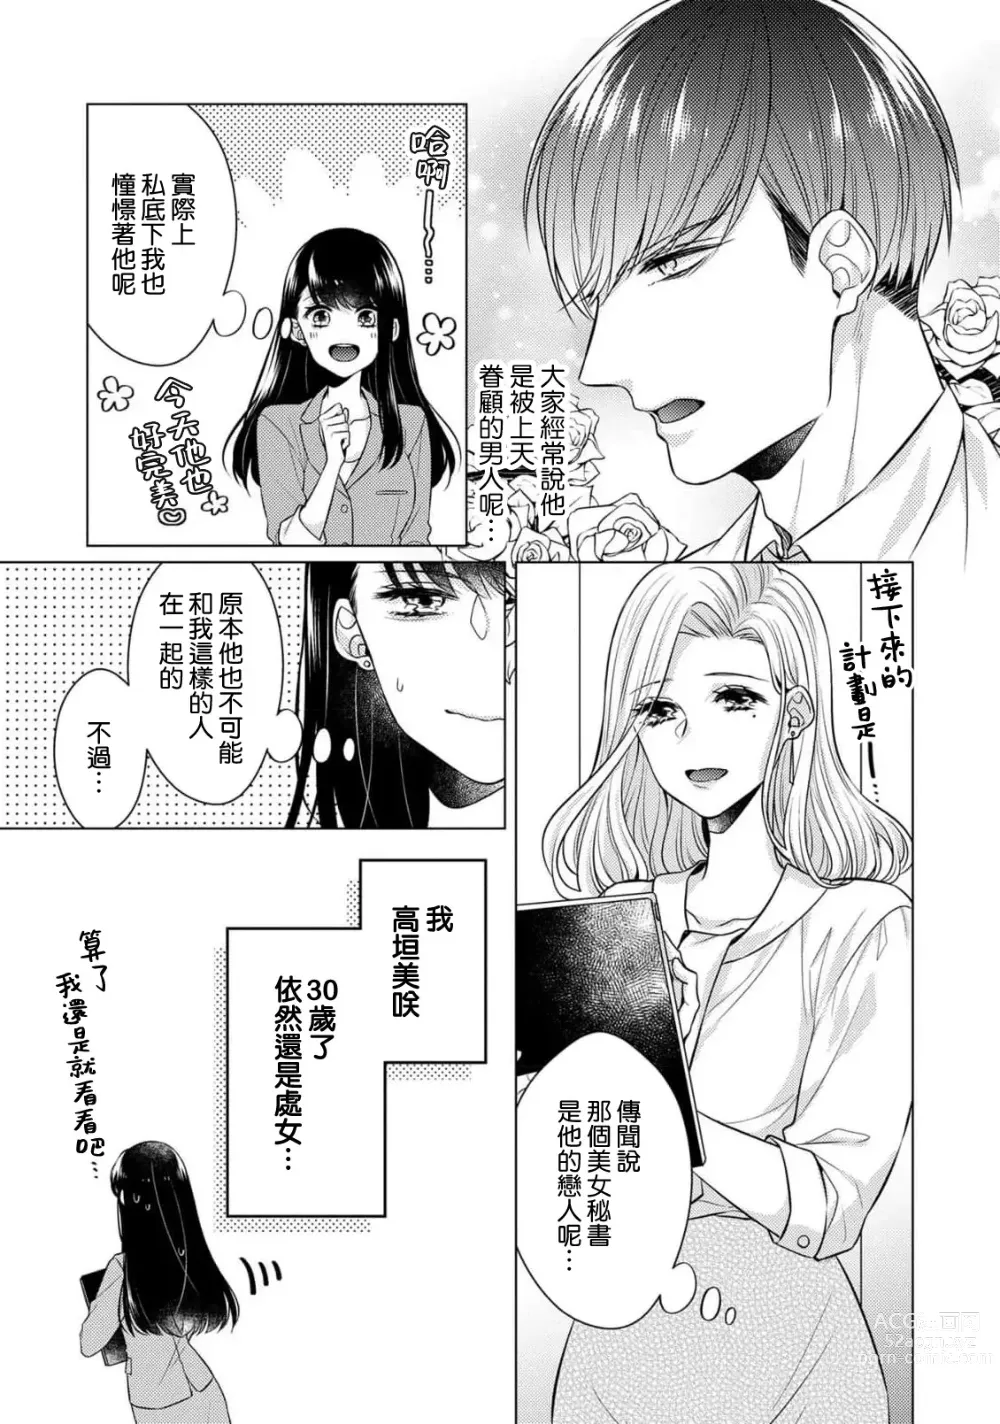 Page 6 of manga 宠爱王子和处女少女~30岁还是处女，这一次和真壁社长签订了炮友契约~ 1-5 end